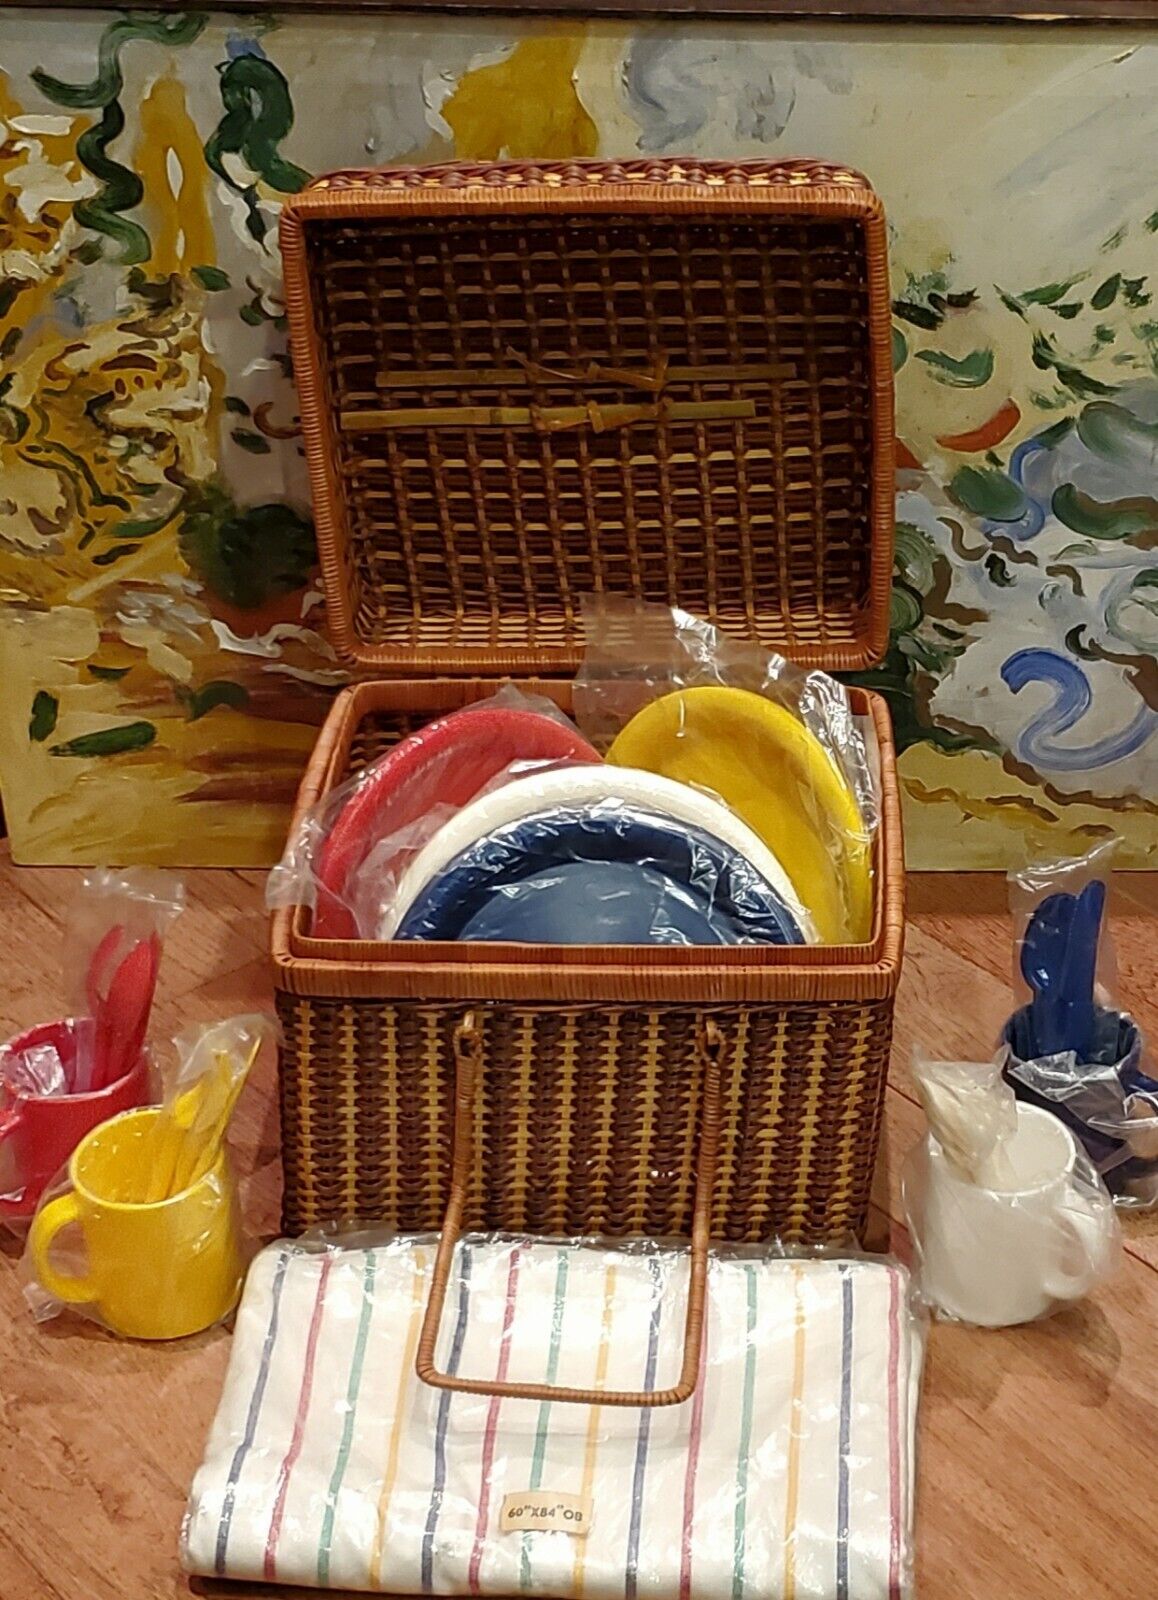 VTG Woven Wicker Rattan Picnic Basket Table Cloth Plates Utensils NEW NEVER USED